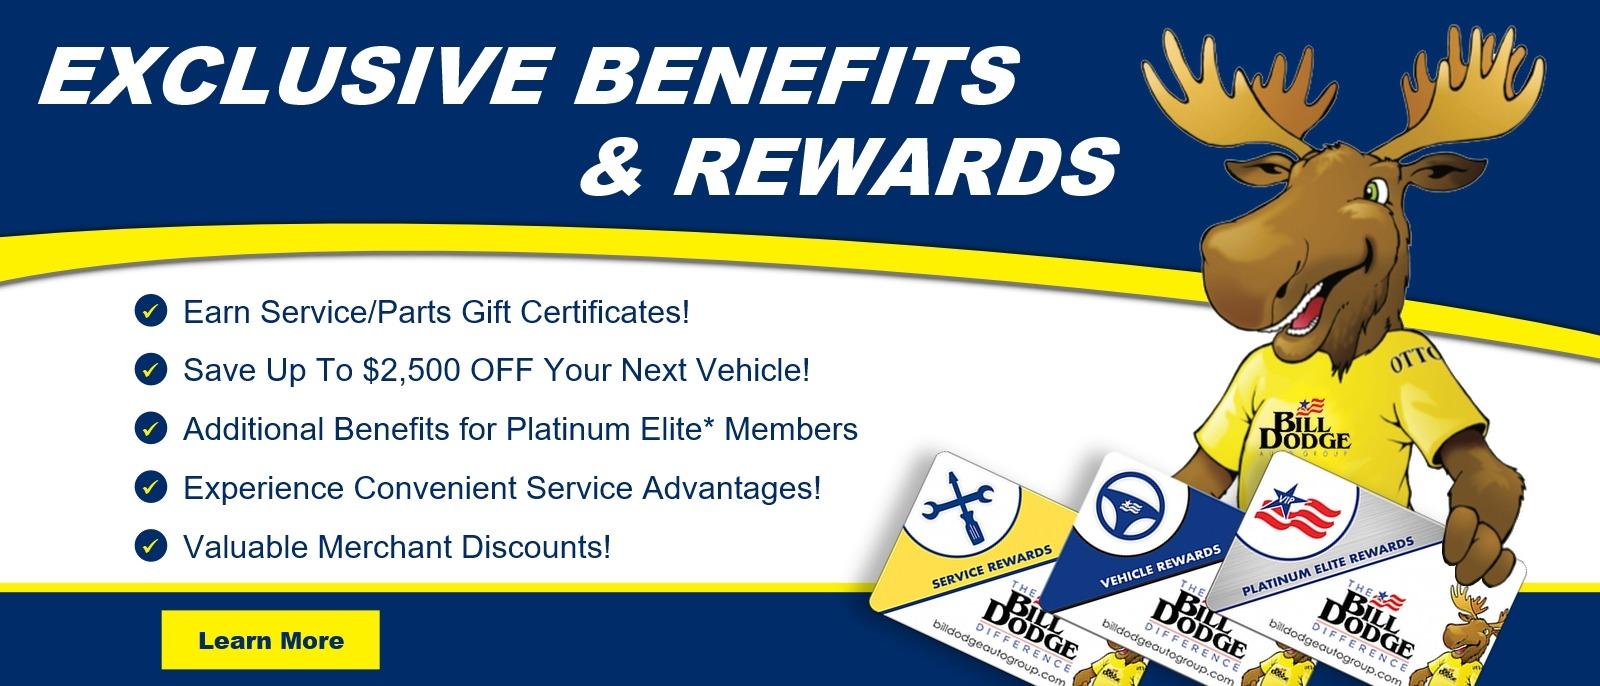 Exclusive Bill Dodge Rewards Program!  
Learn More